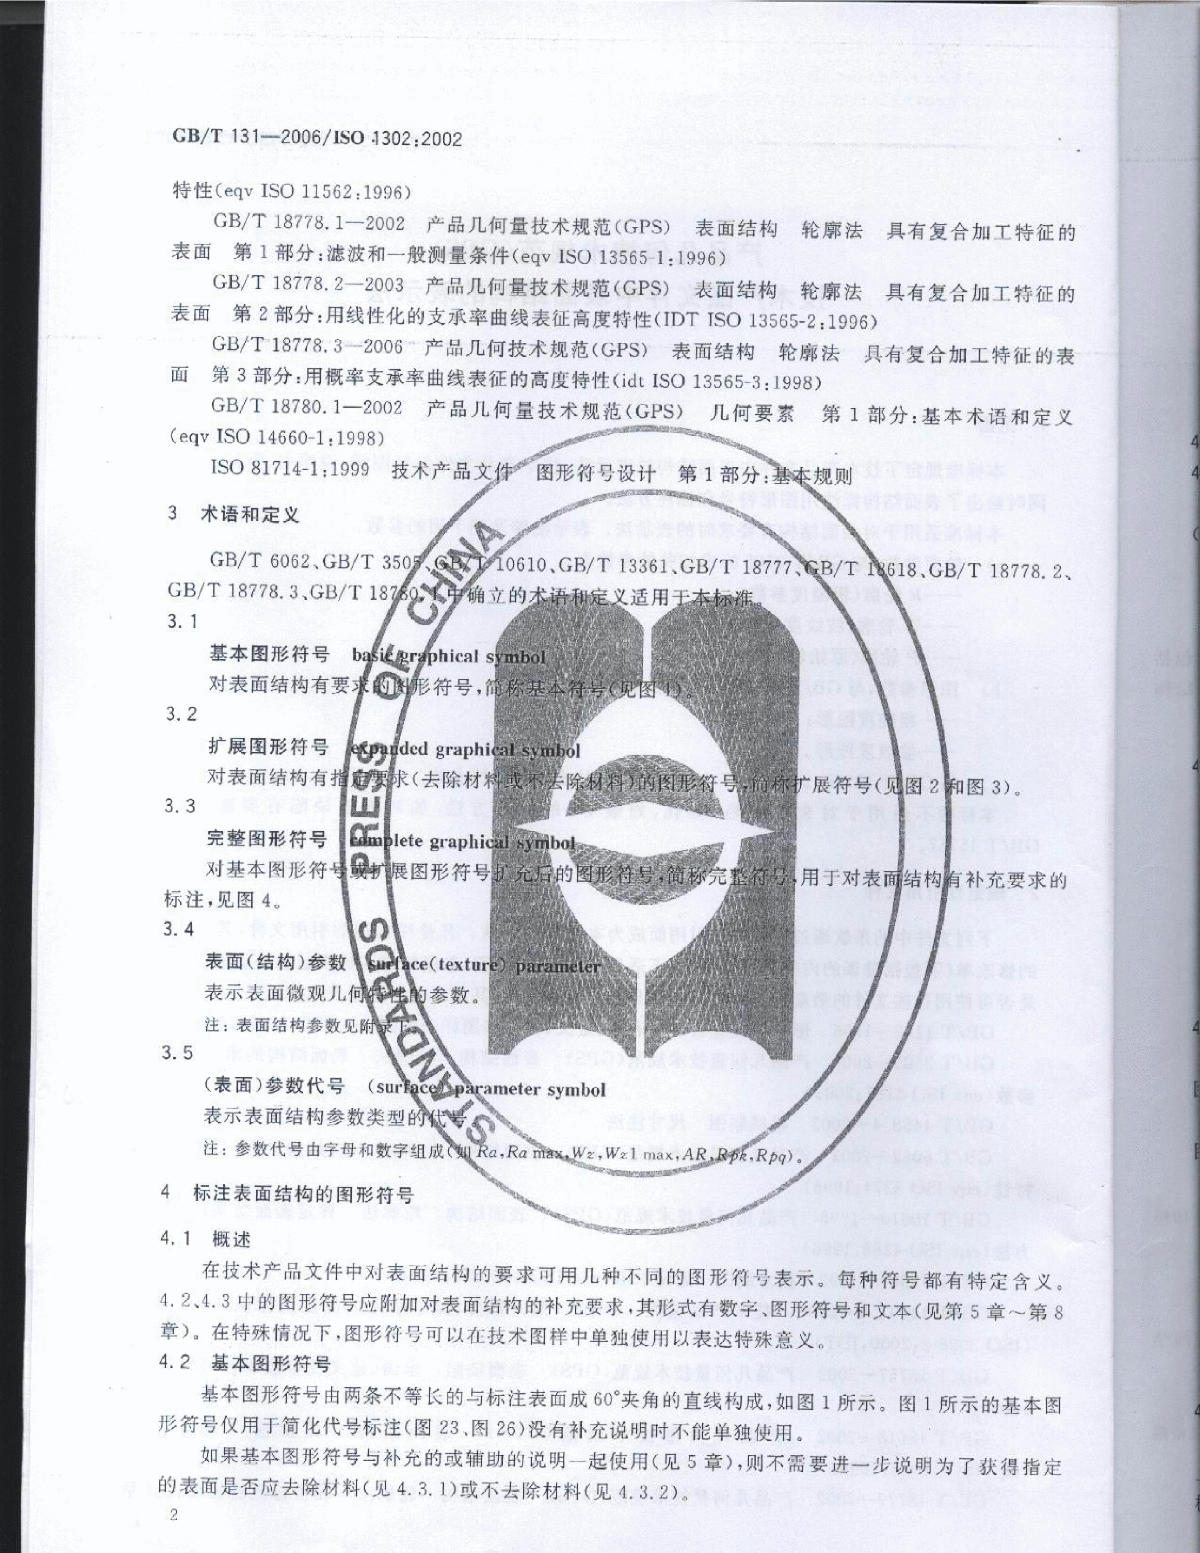  GB_T131-2006技术产品文件中表面结构的表示法-图二